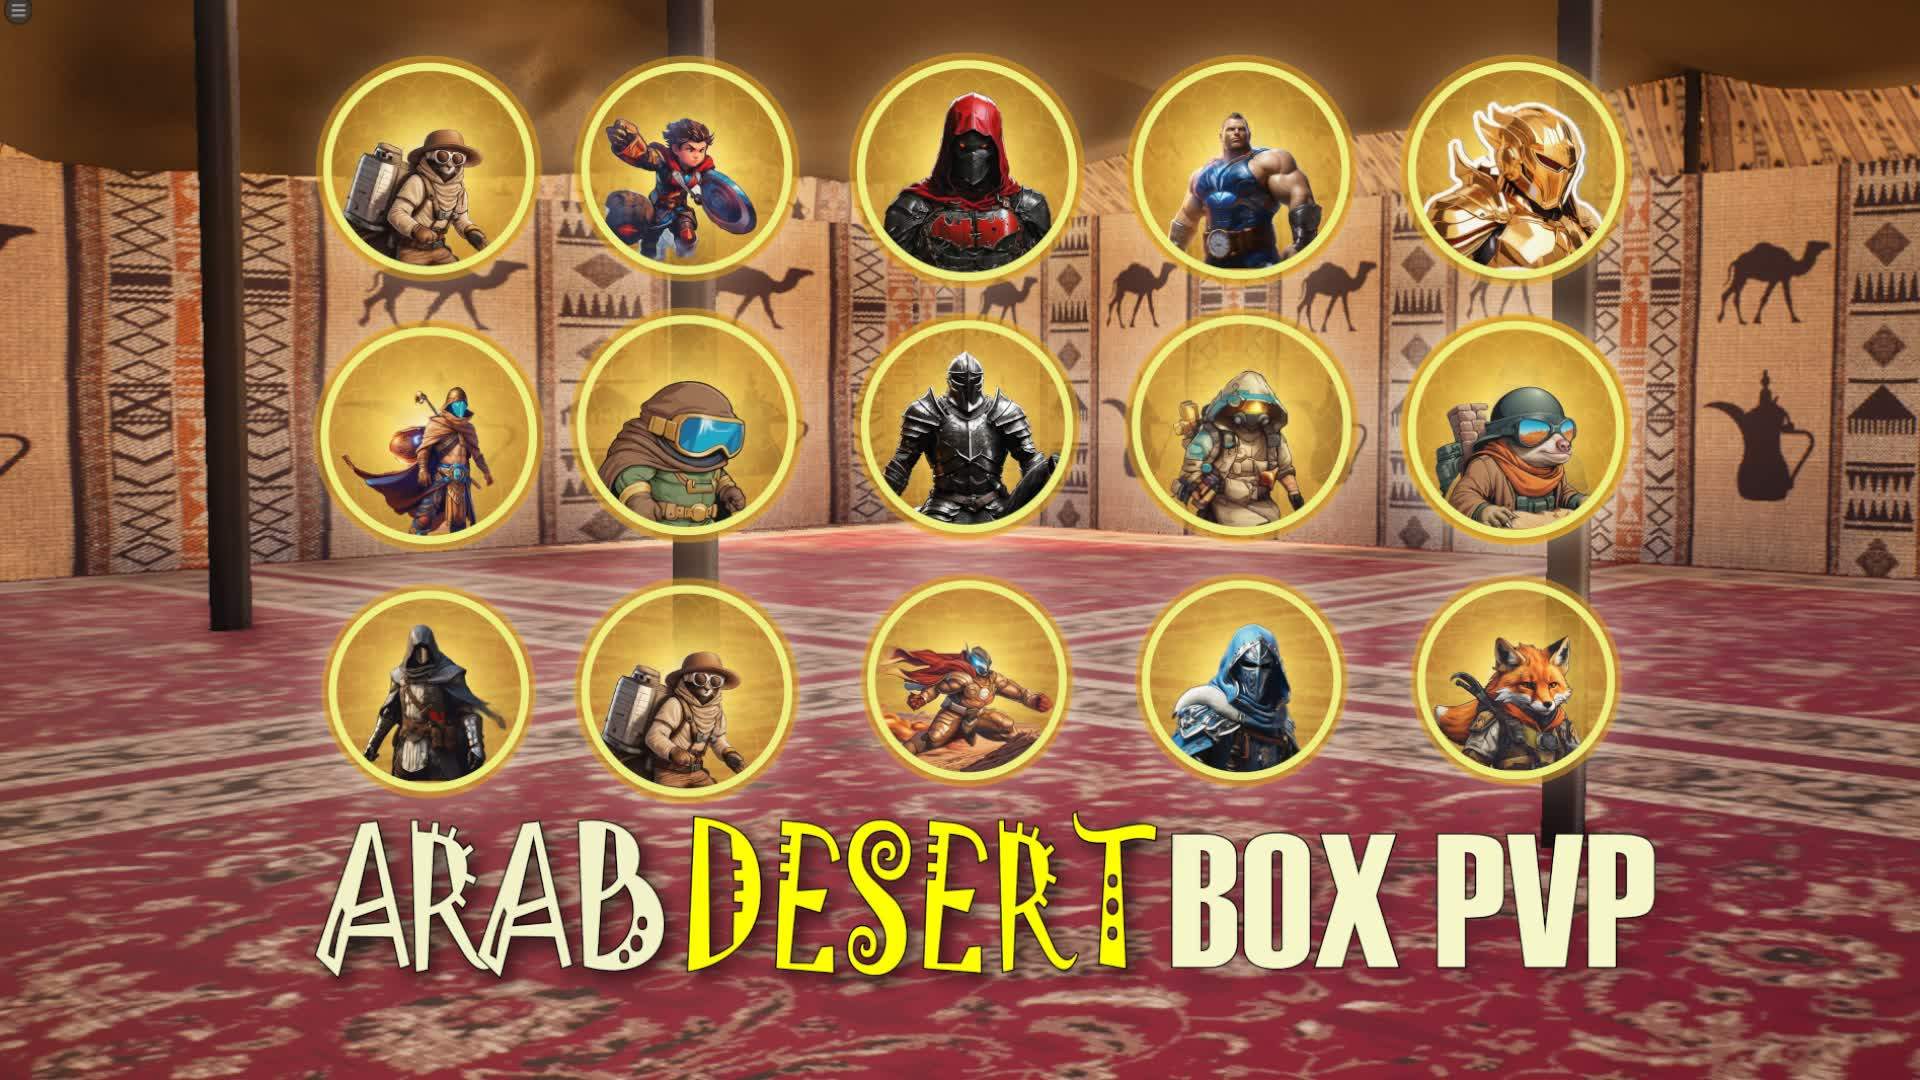 ARAB DESERT BOX PVP